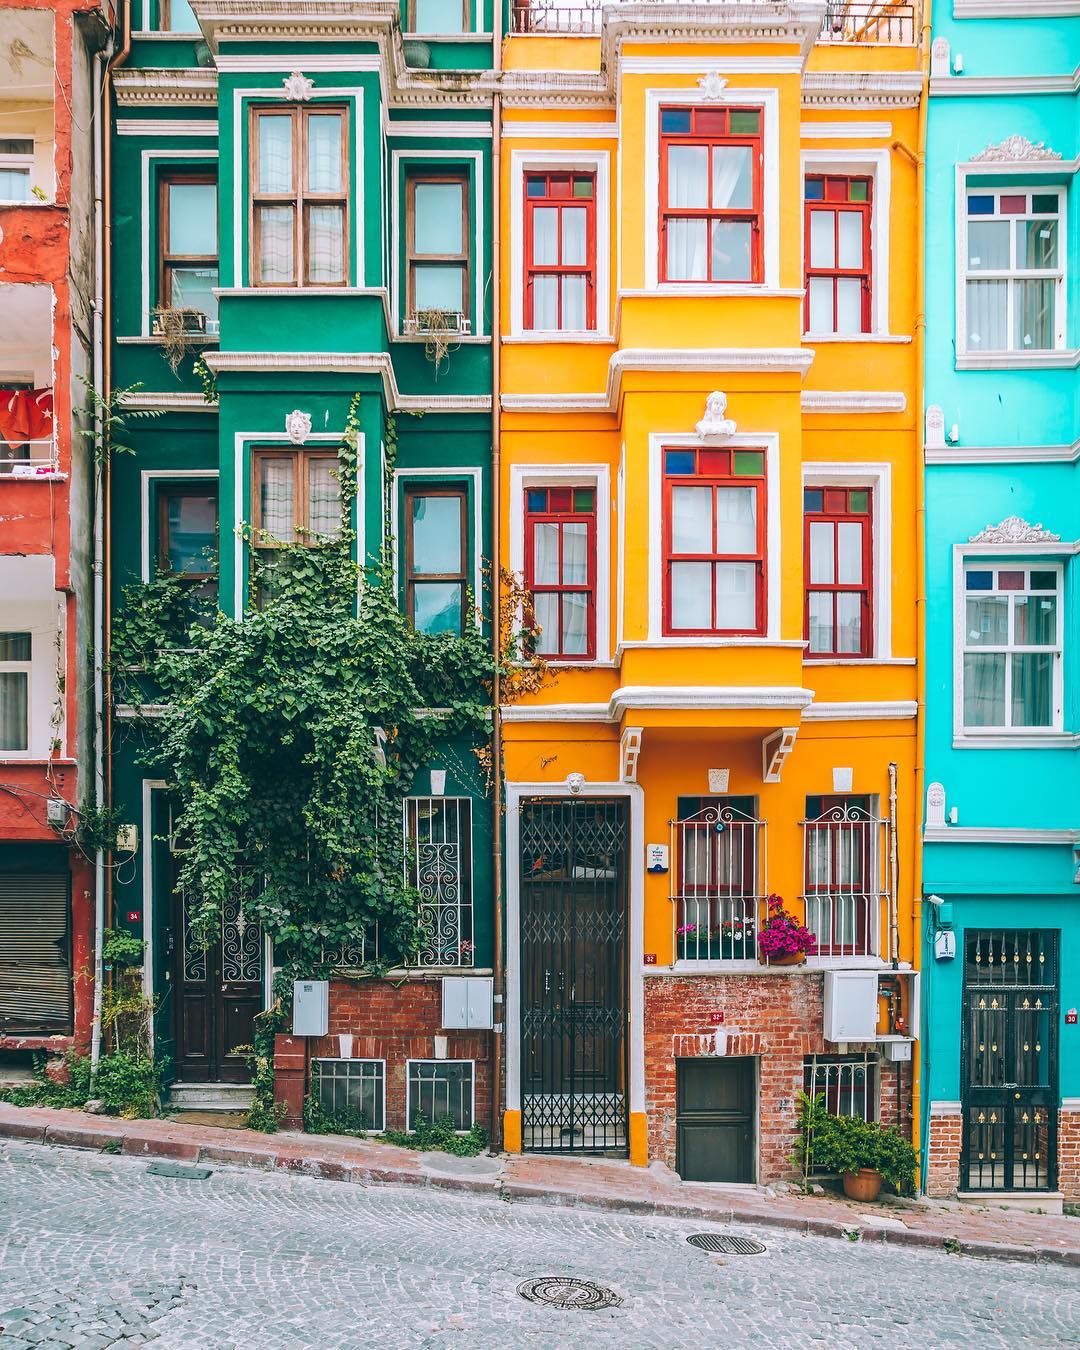 Colorful houses. Стамбул Балат цветные домики. Район Балат Турция. Район Балат в Стамбуле. Улочки Стамбула разноцветные домики.